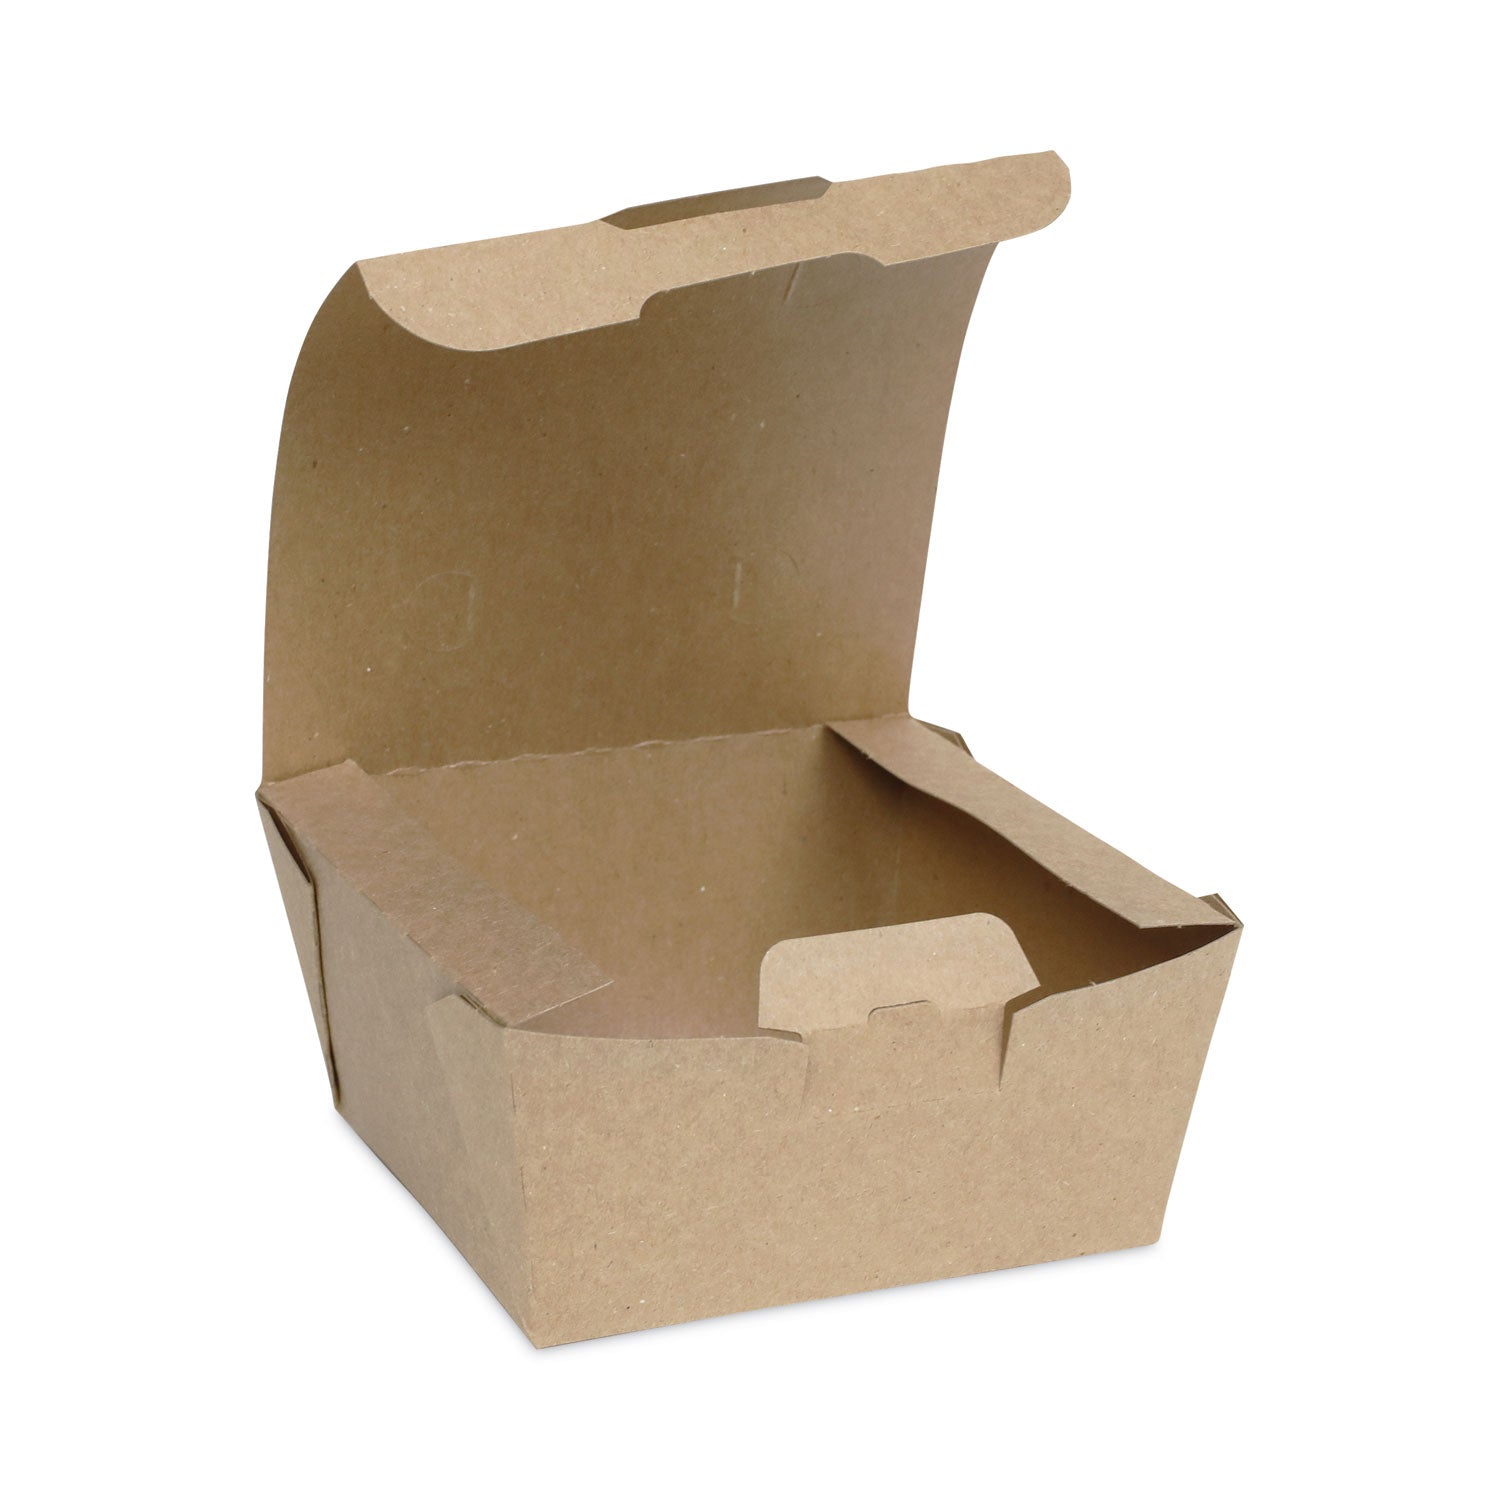 earthchoice-tamper-evident-onebox-paper-box-45-x-45-x-25-kraft-312-carton_pctnob01kecte - 2